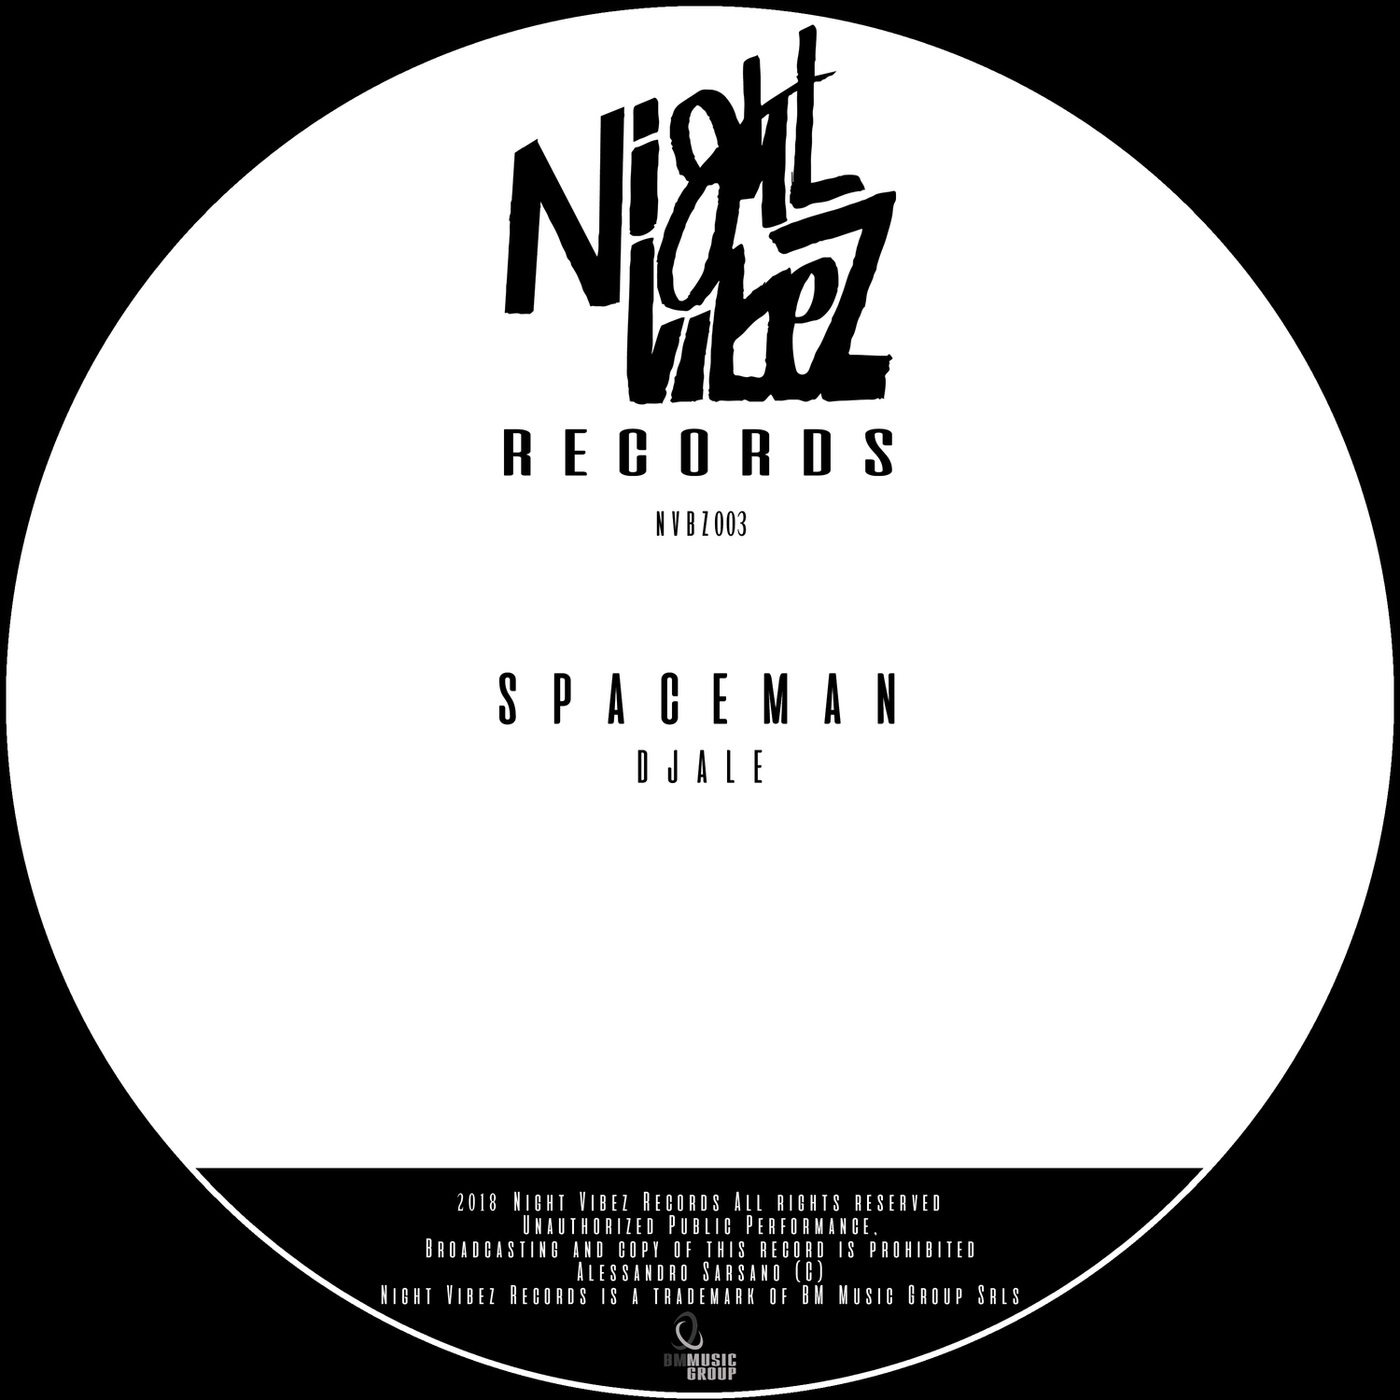 Djale - Spaceman / Night Vibez Records